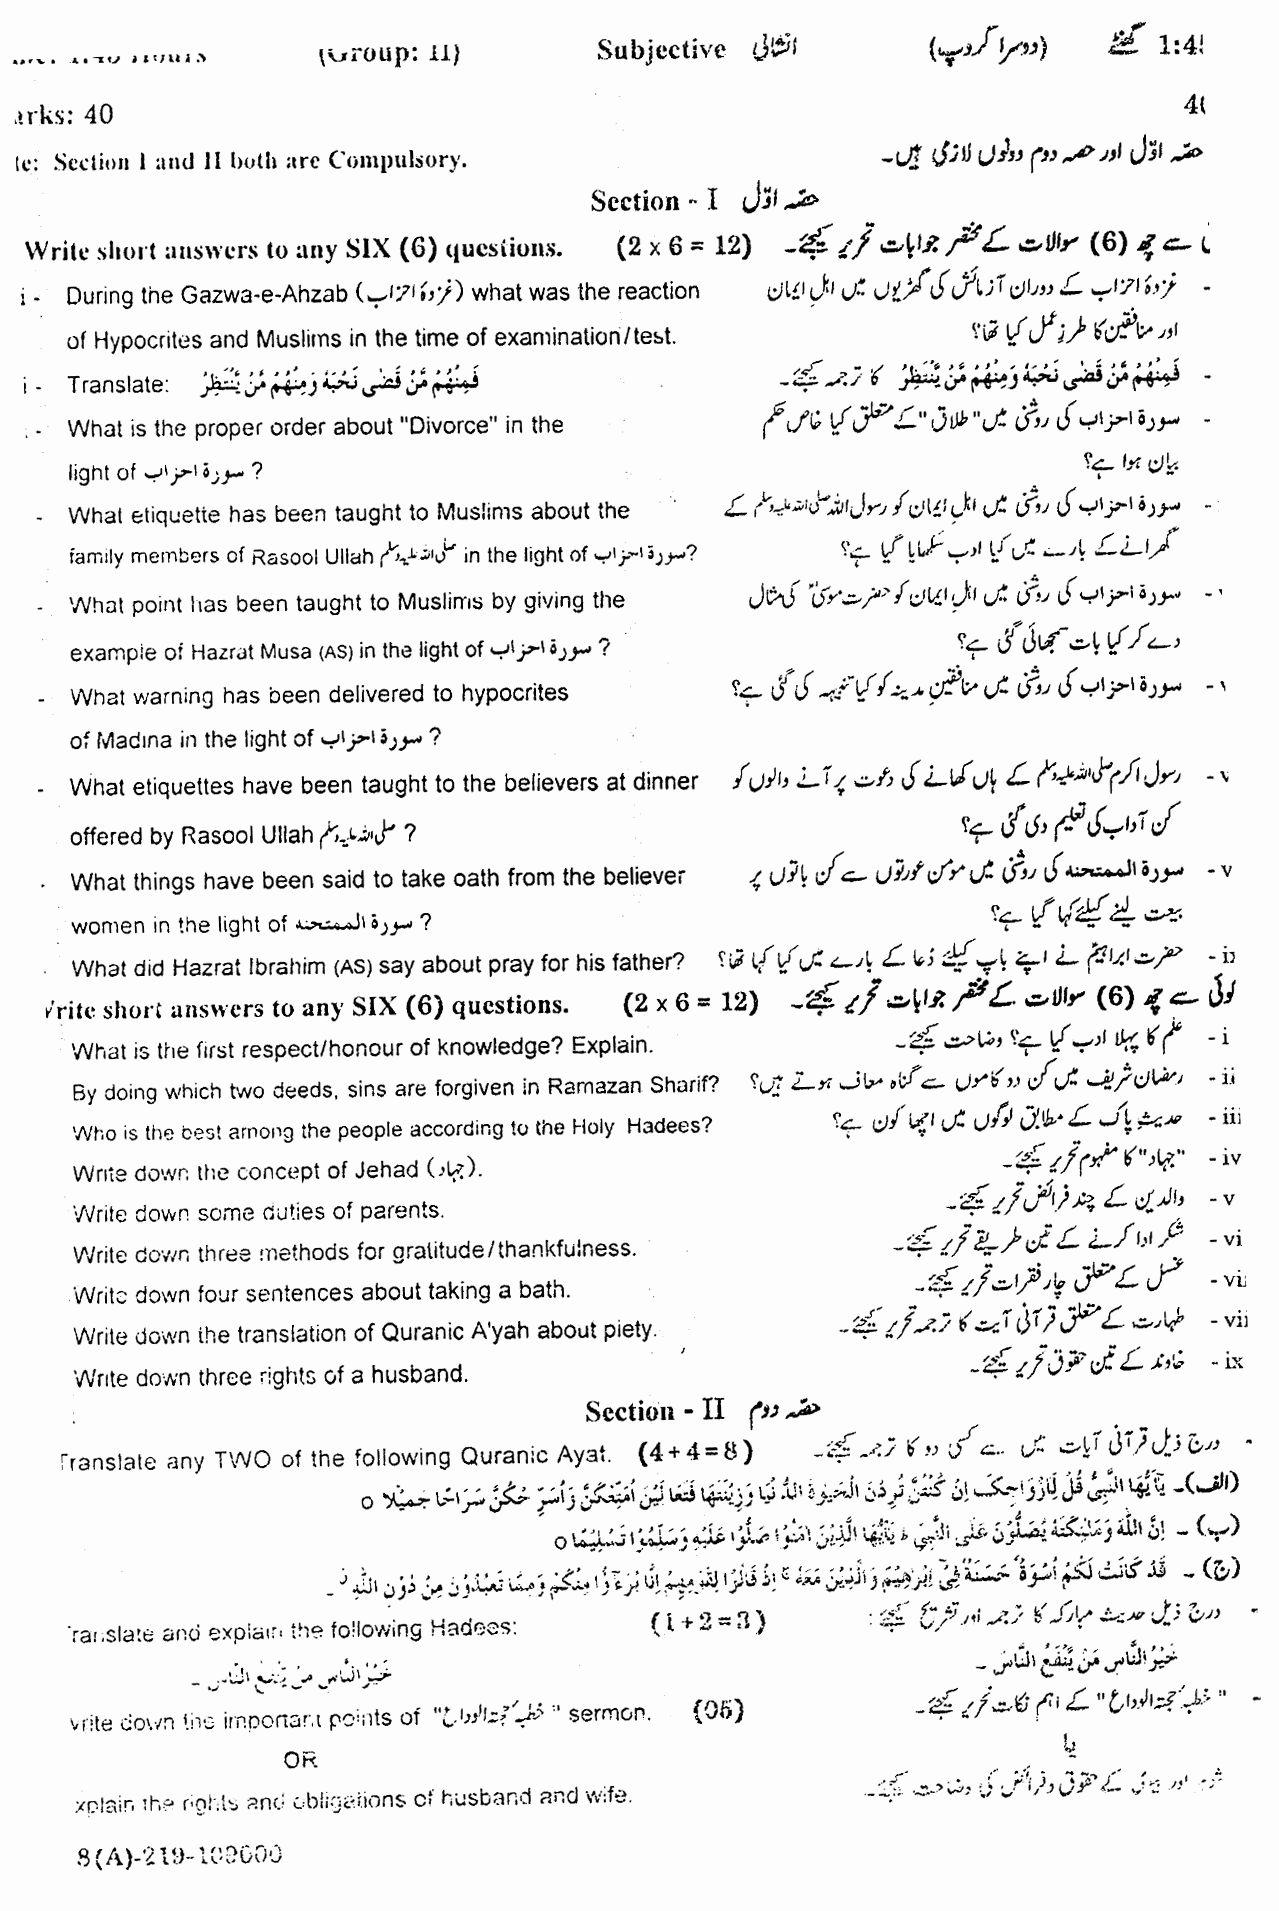 10th Class Islamiyat Paper 2019 Gujranwala Board Subjective Group 2